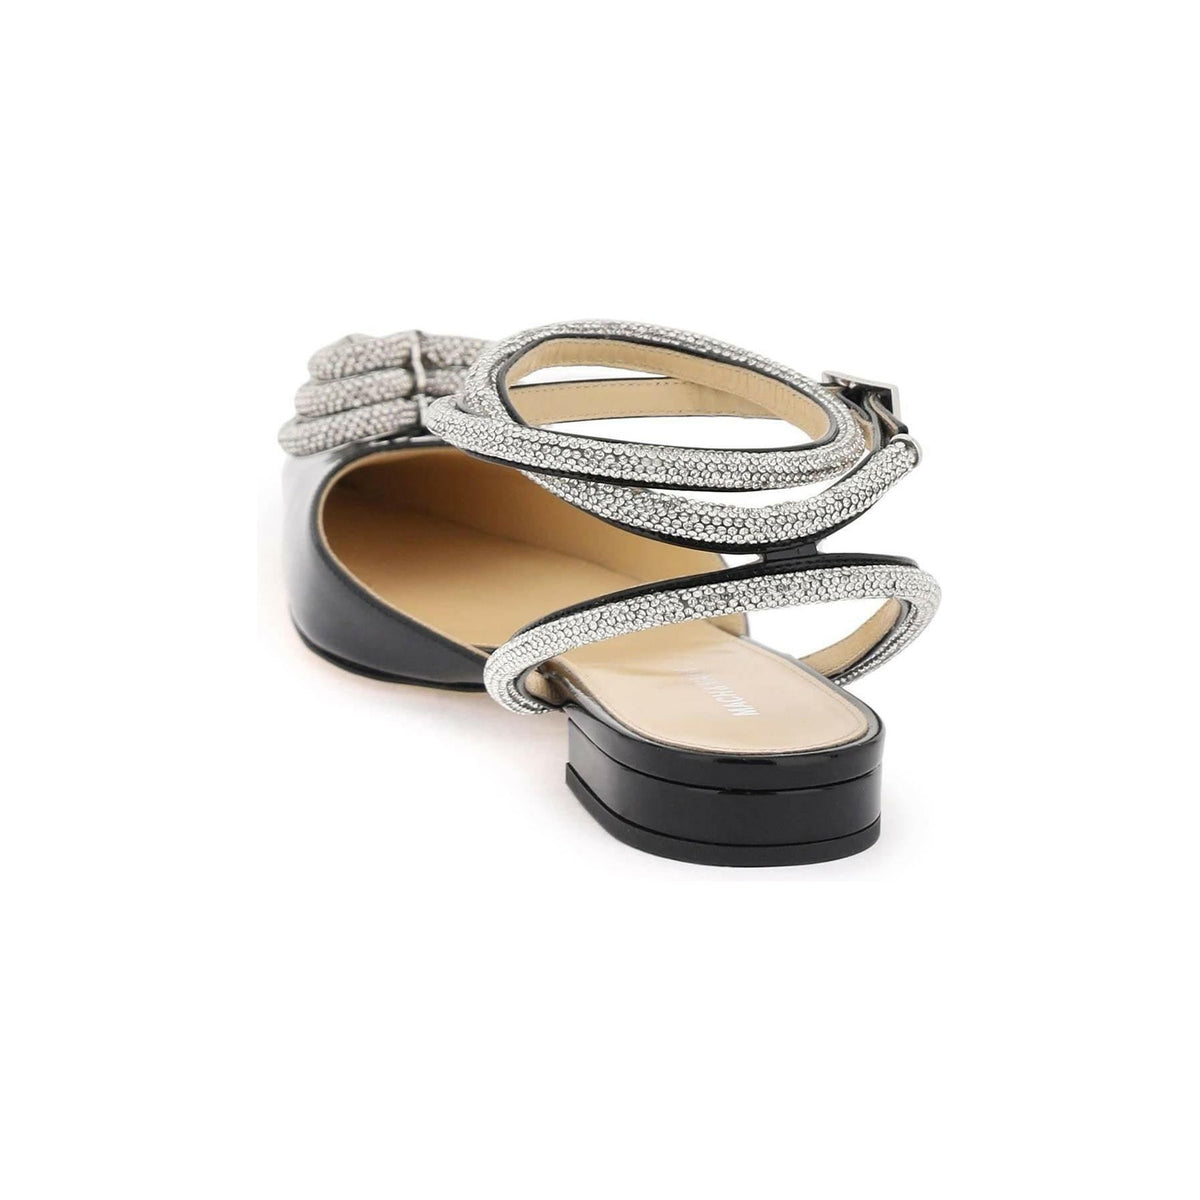 MACH & MACH - Black Triple Heart Crystal-Embellished Patent Leather Ballerina Shoes - JOHN JULIA